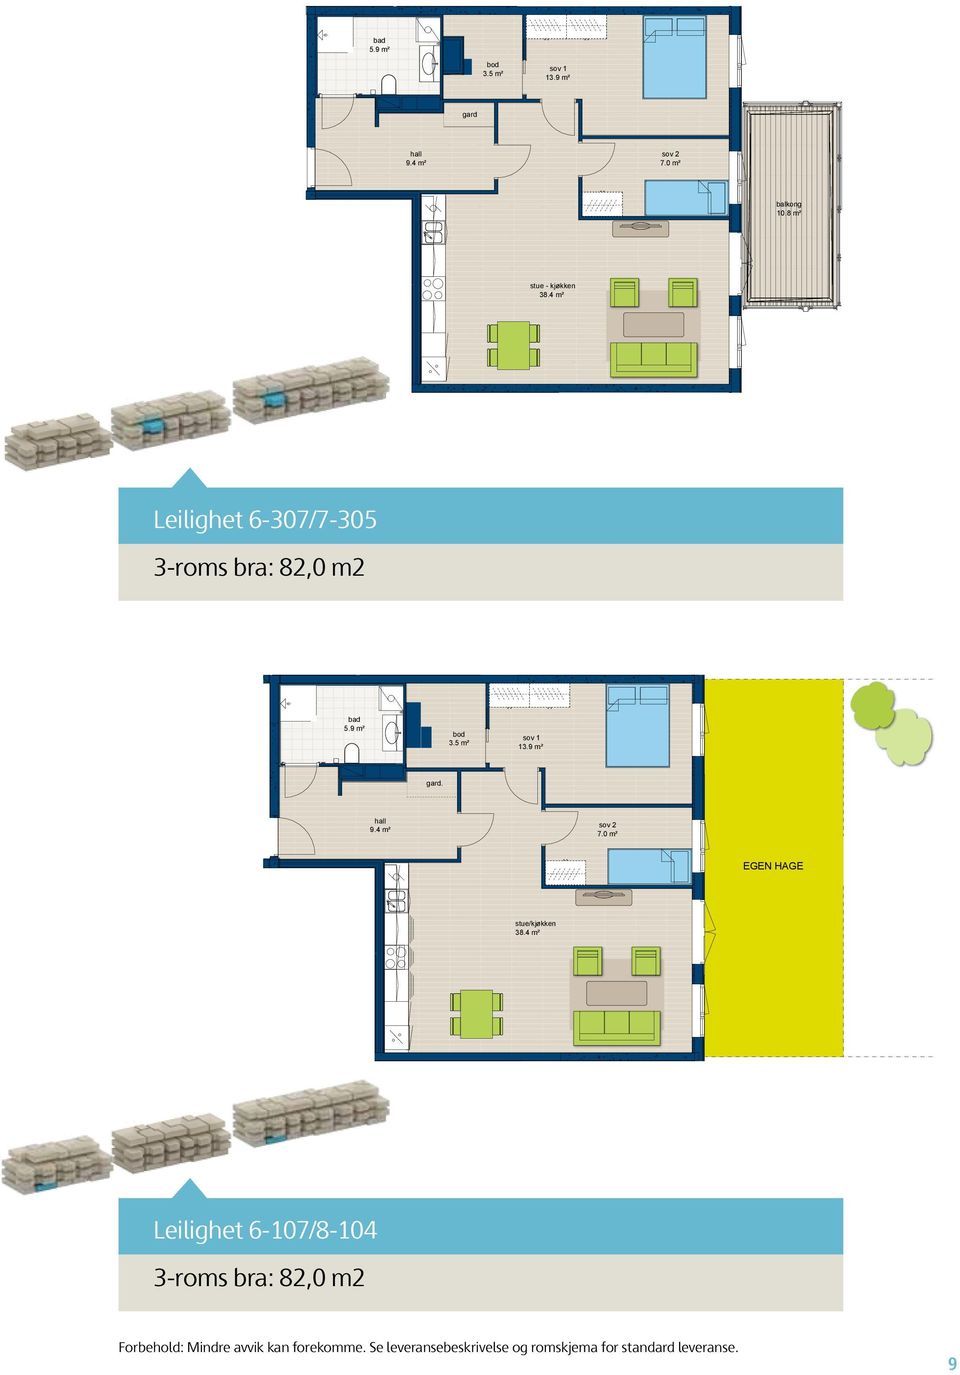 4 m² Leilighet 6-307/7-305 3-roms bra: 82,0 m2 TYPE G-1 3 roms 82,0 m² 6-107 bad 5.9 m² 3.5 m² 13.